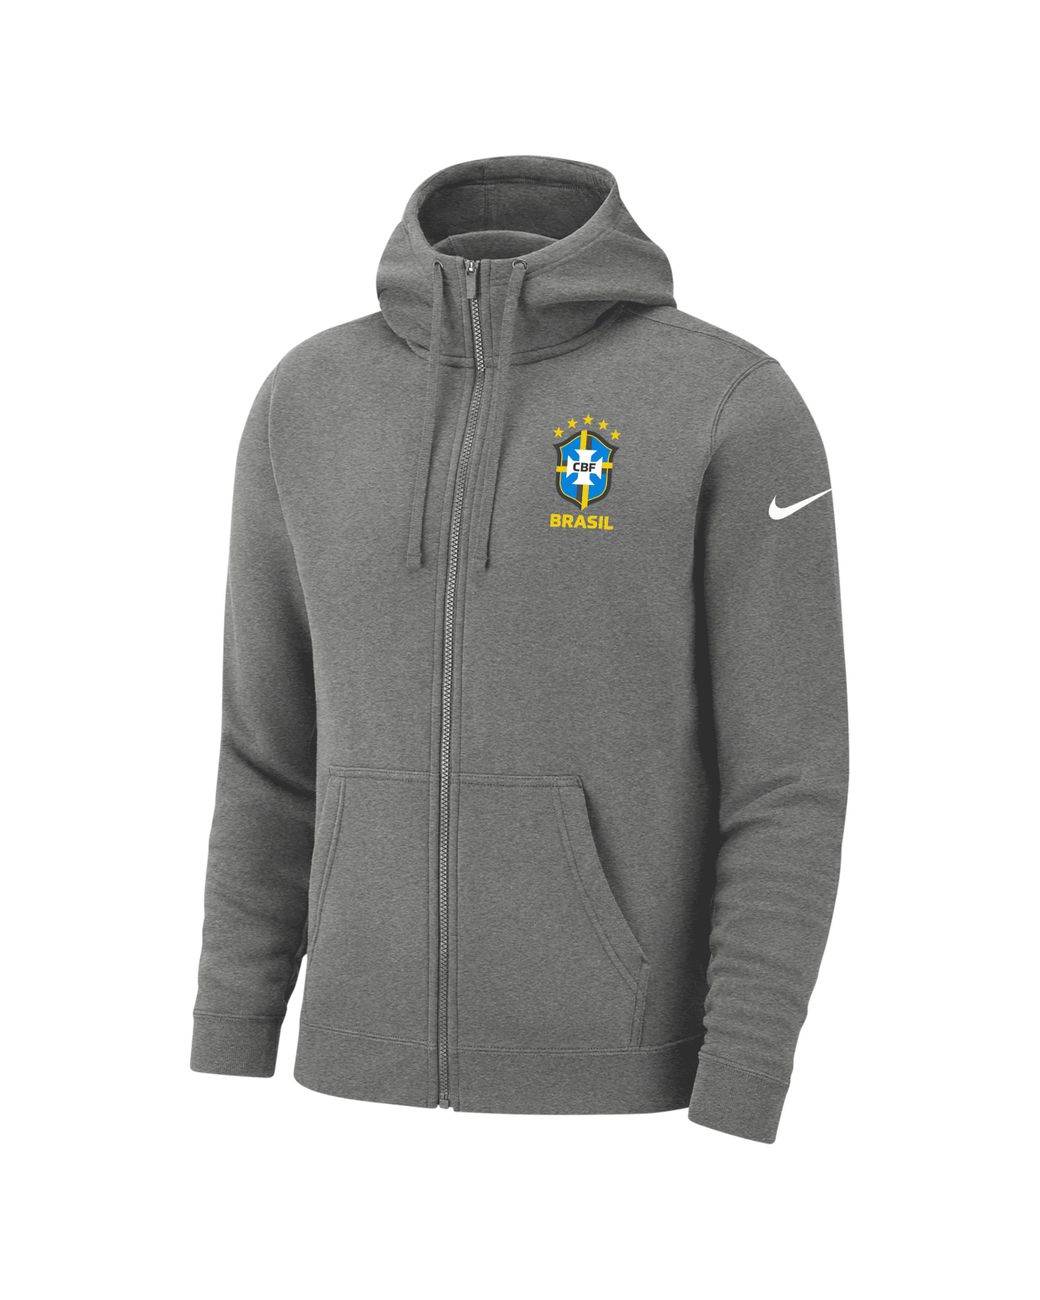 Nike Brazil Club Fleece Full-zip Hoodie In Grey, in Gray for Men